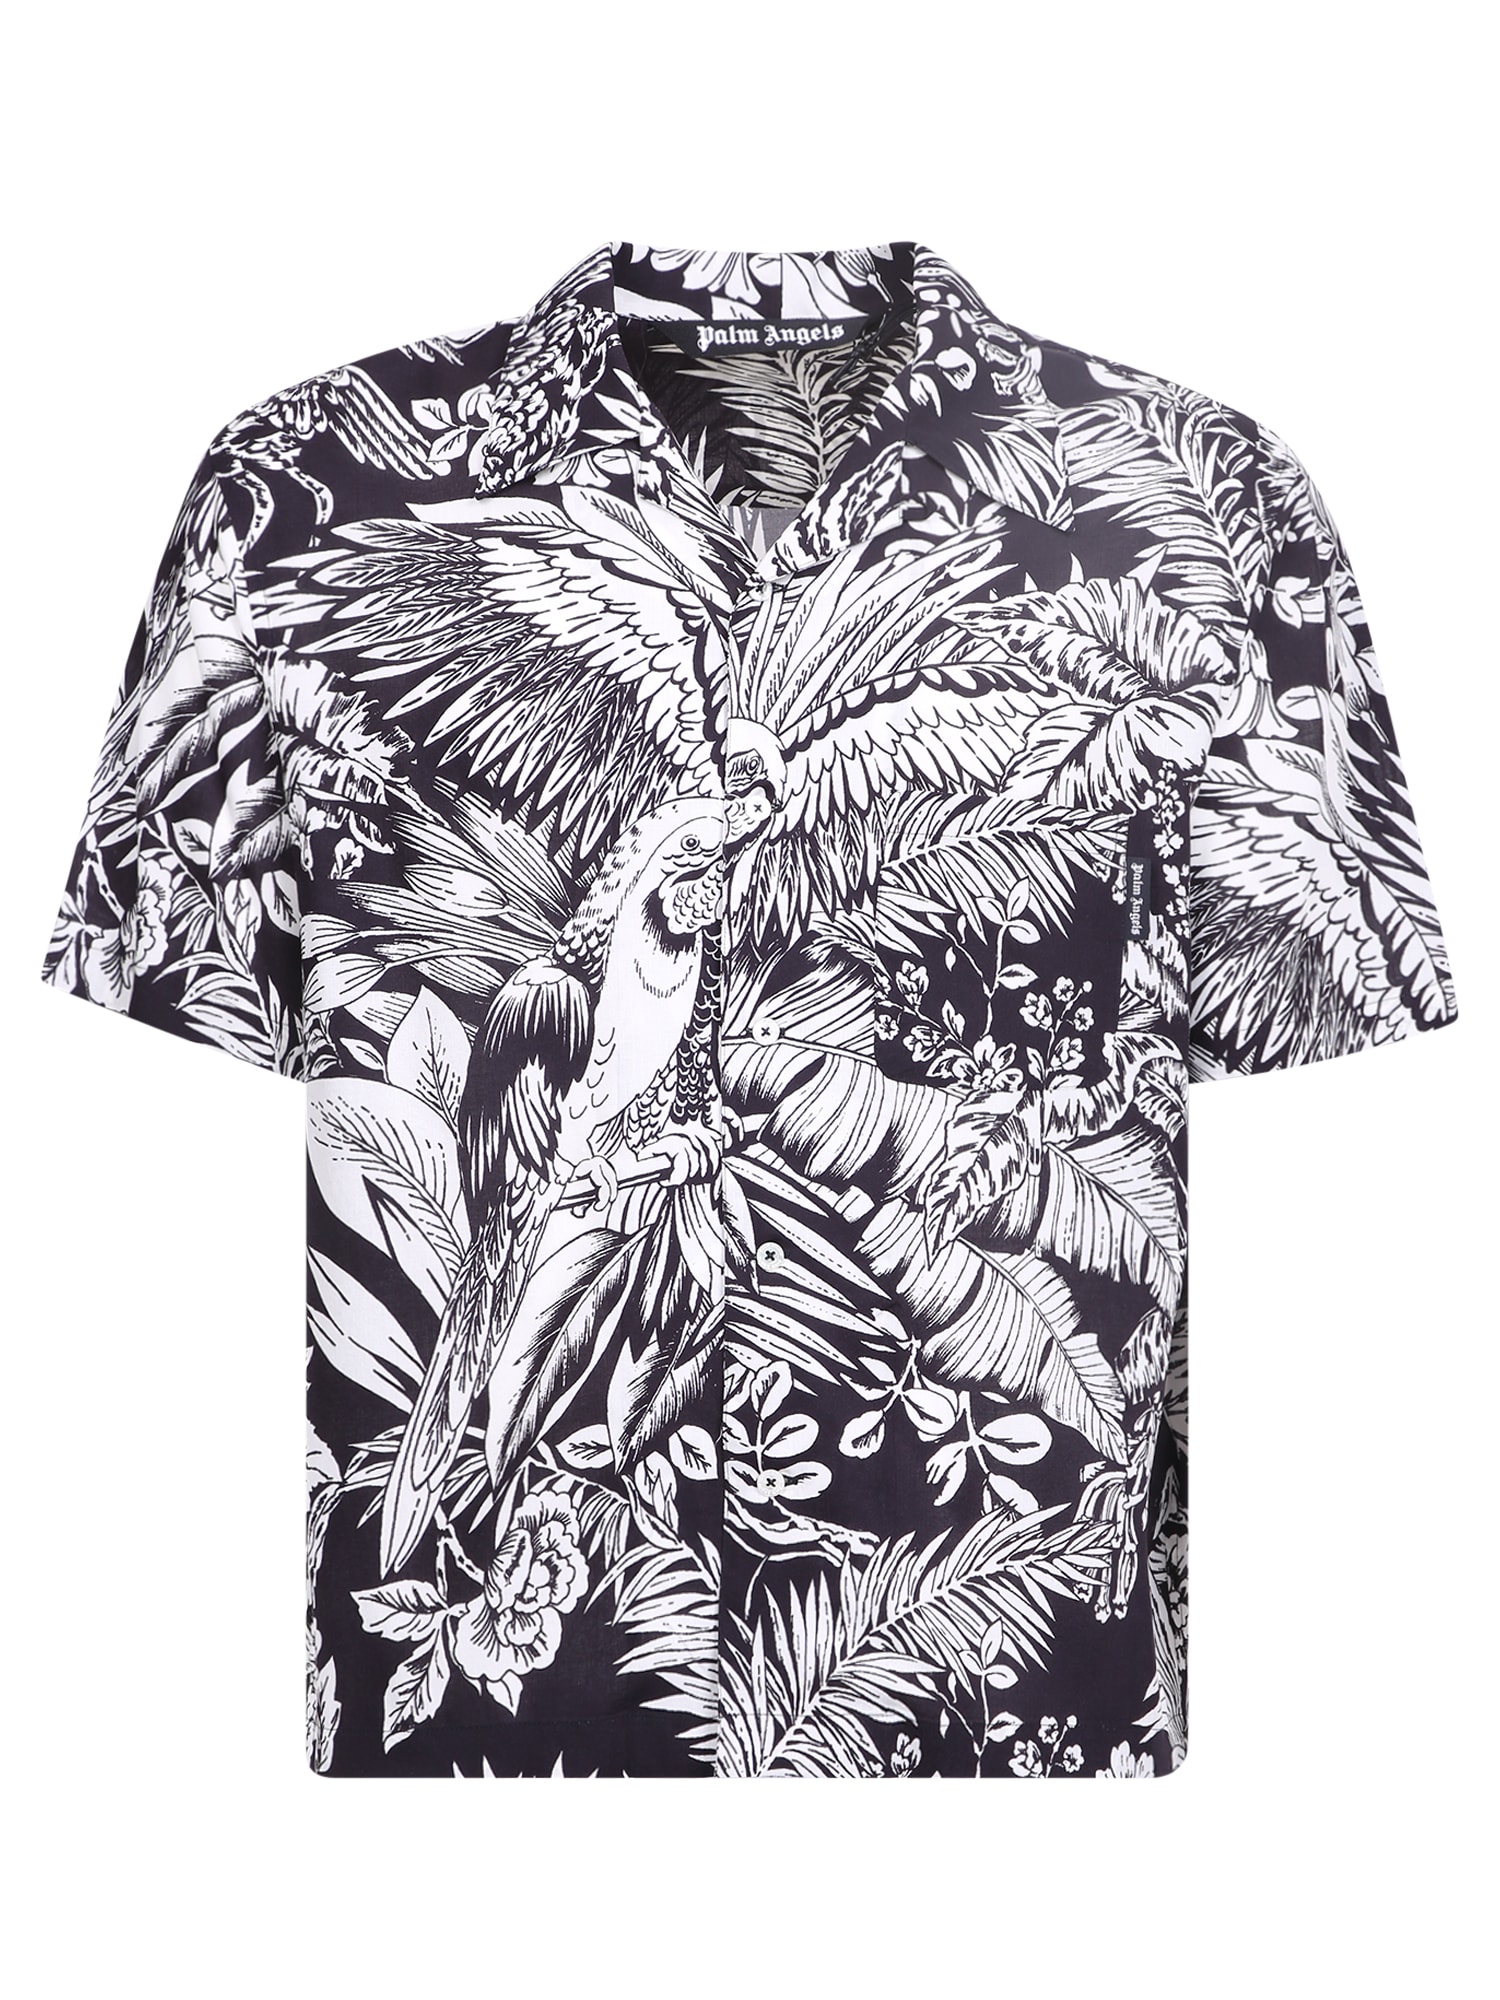 Palm Angels Graphic Print Shirt